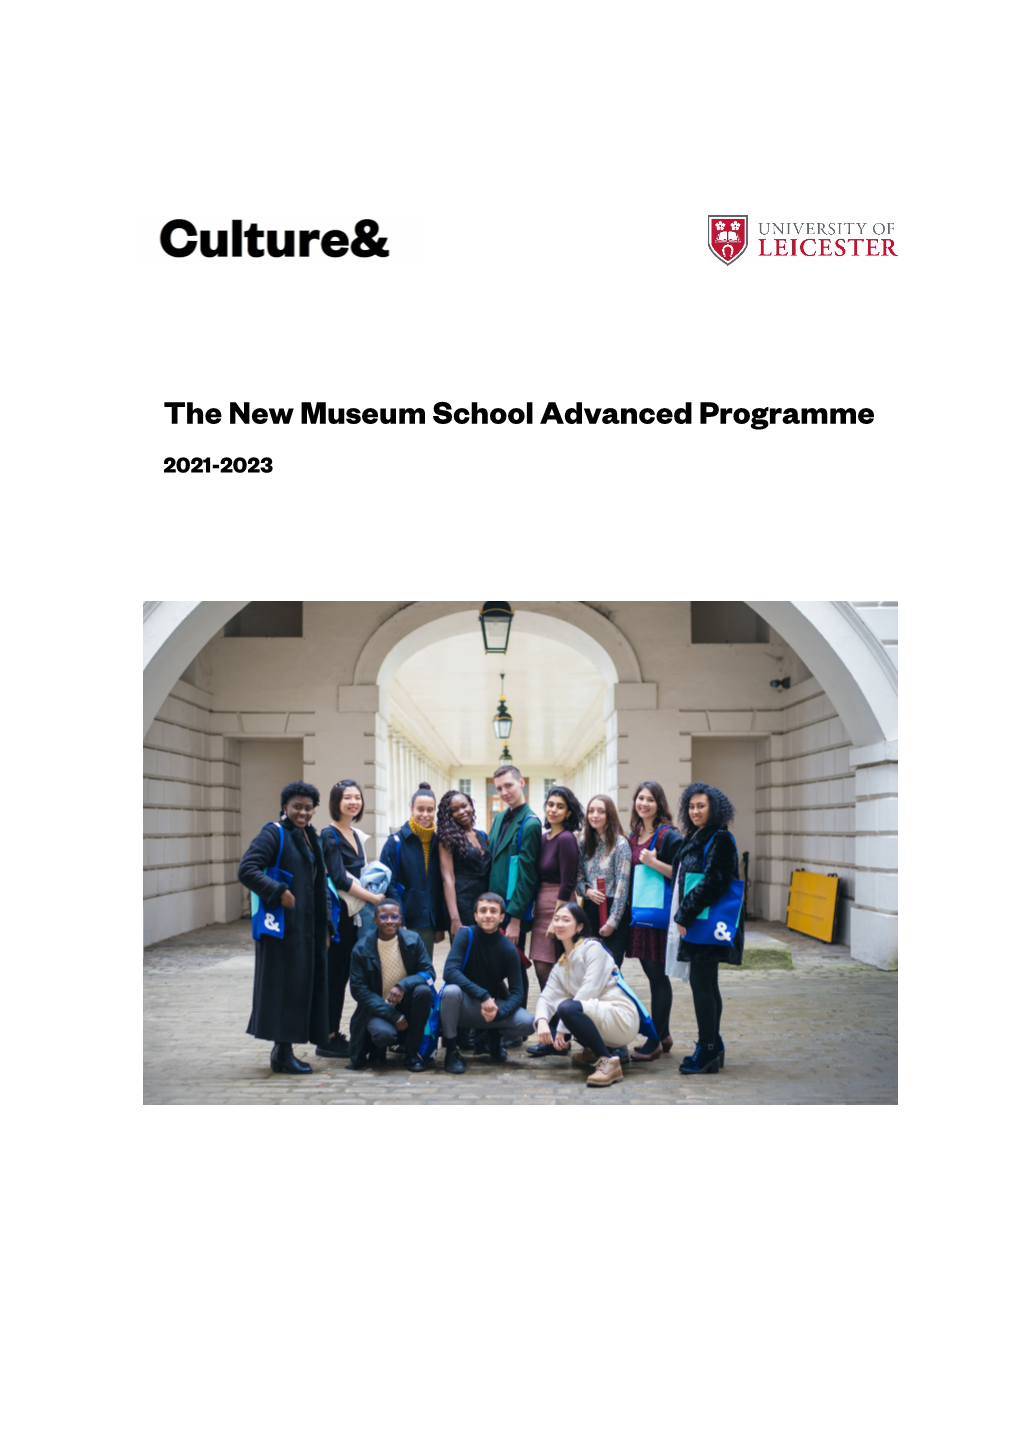 The New Museum School Advanced Programme 2021-2023